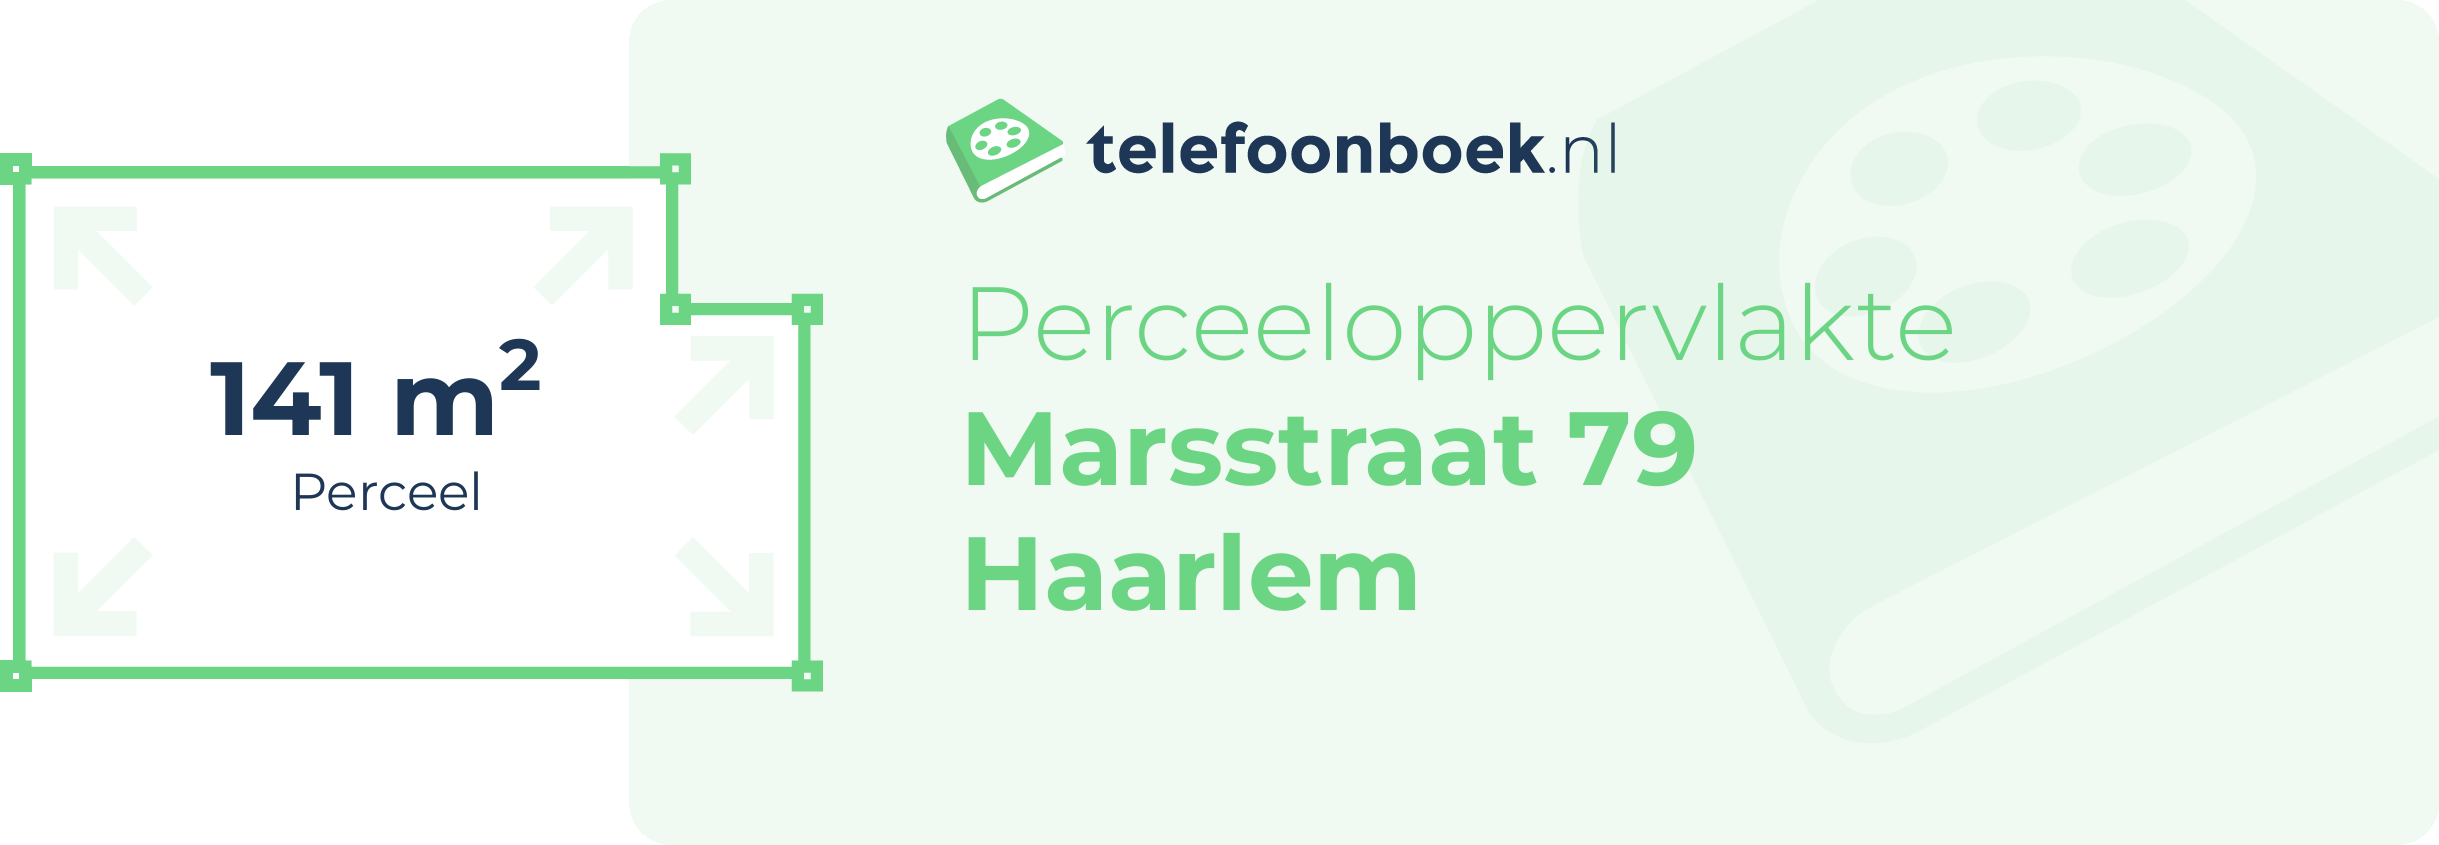 Perceeloppervlakte Marsstraat 79 Haarlem